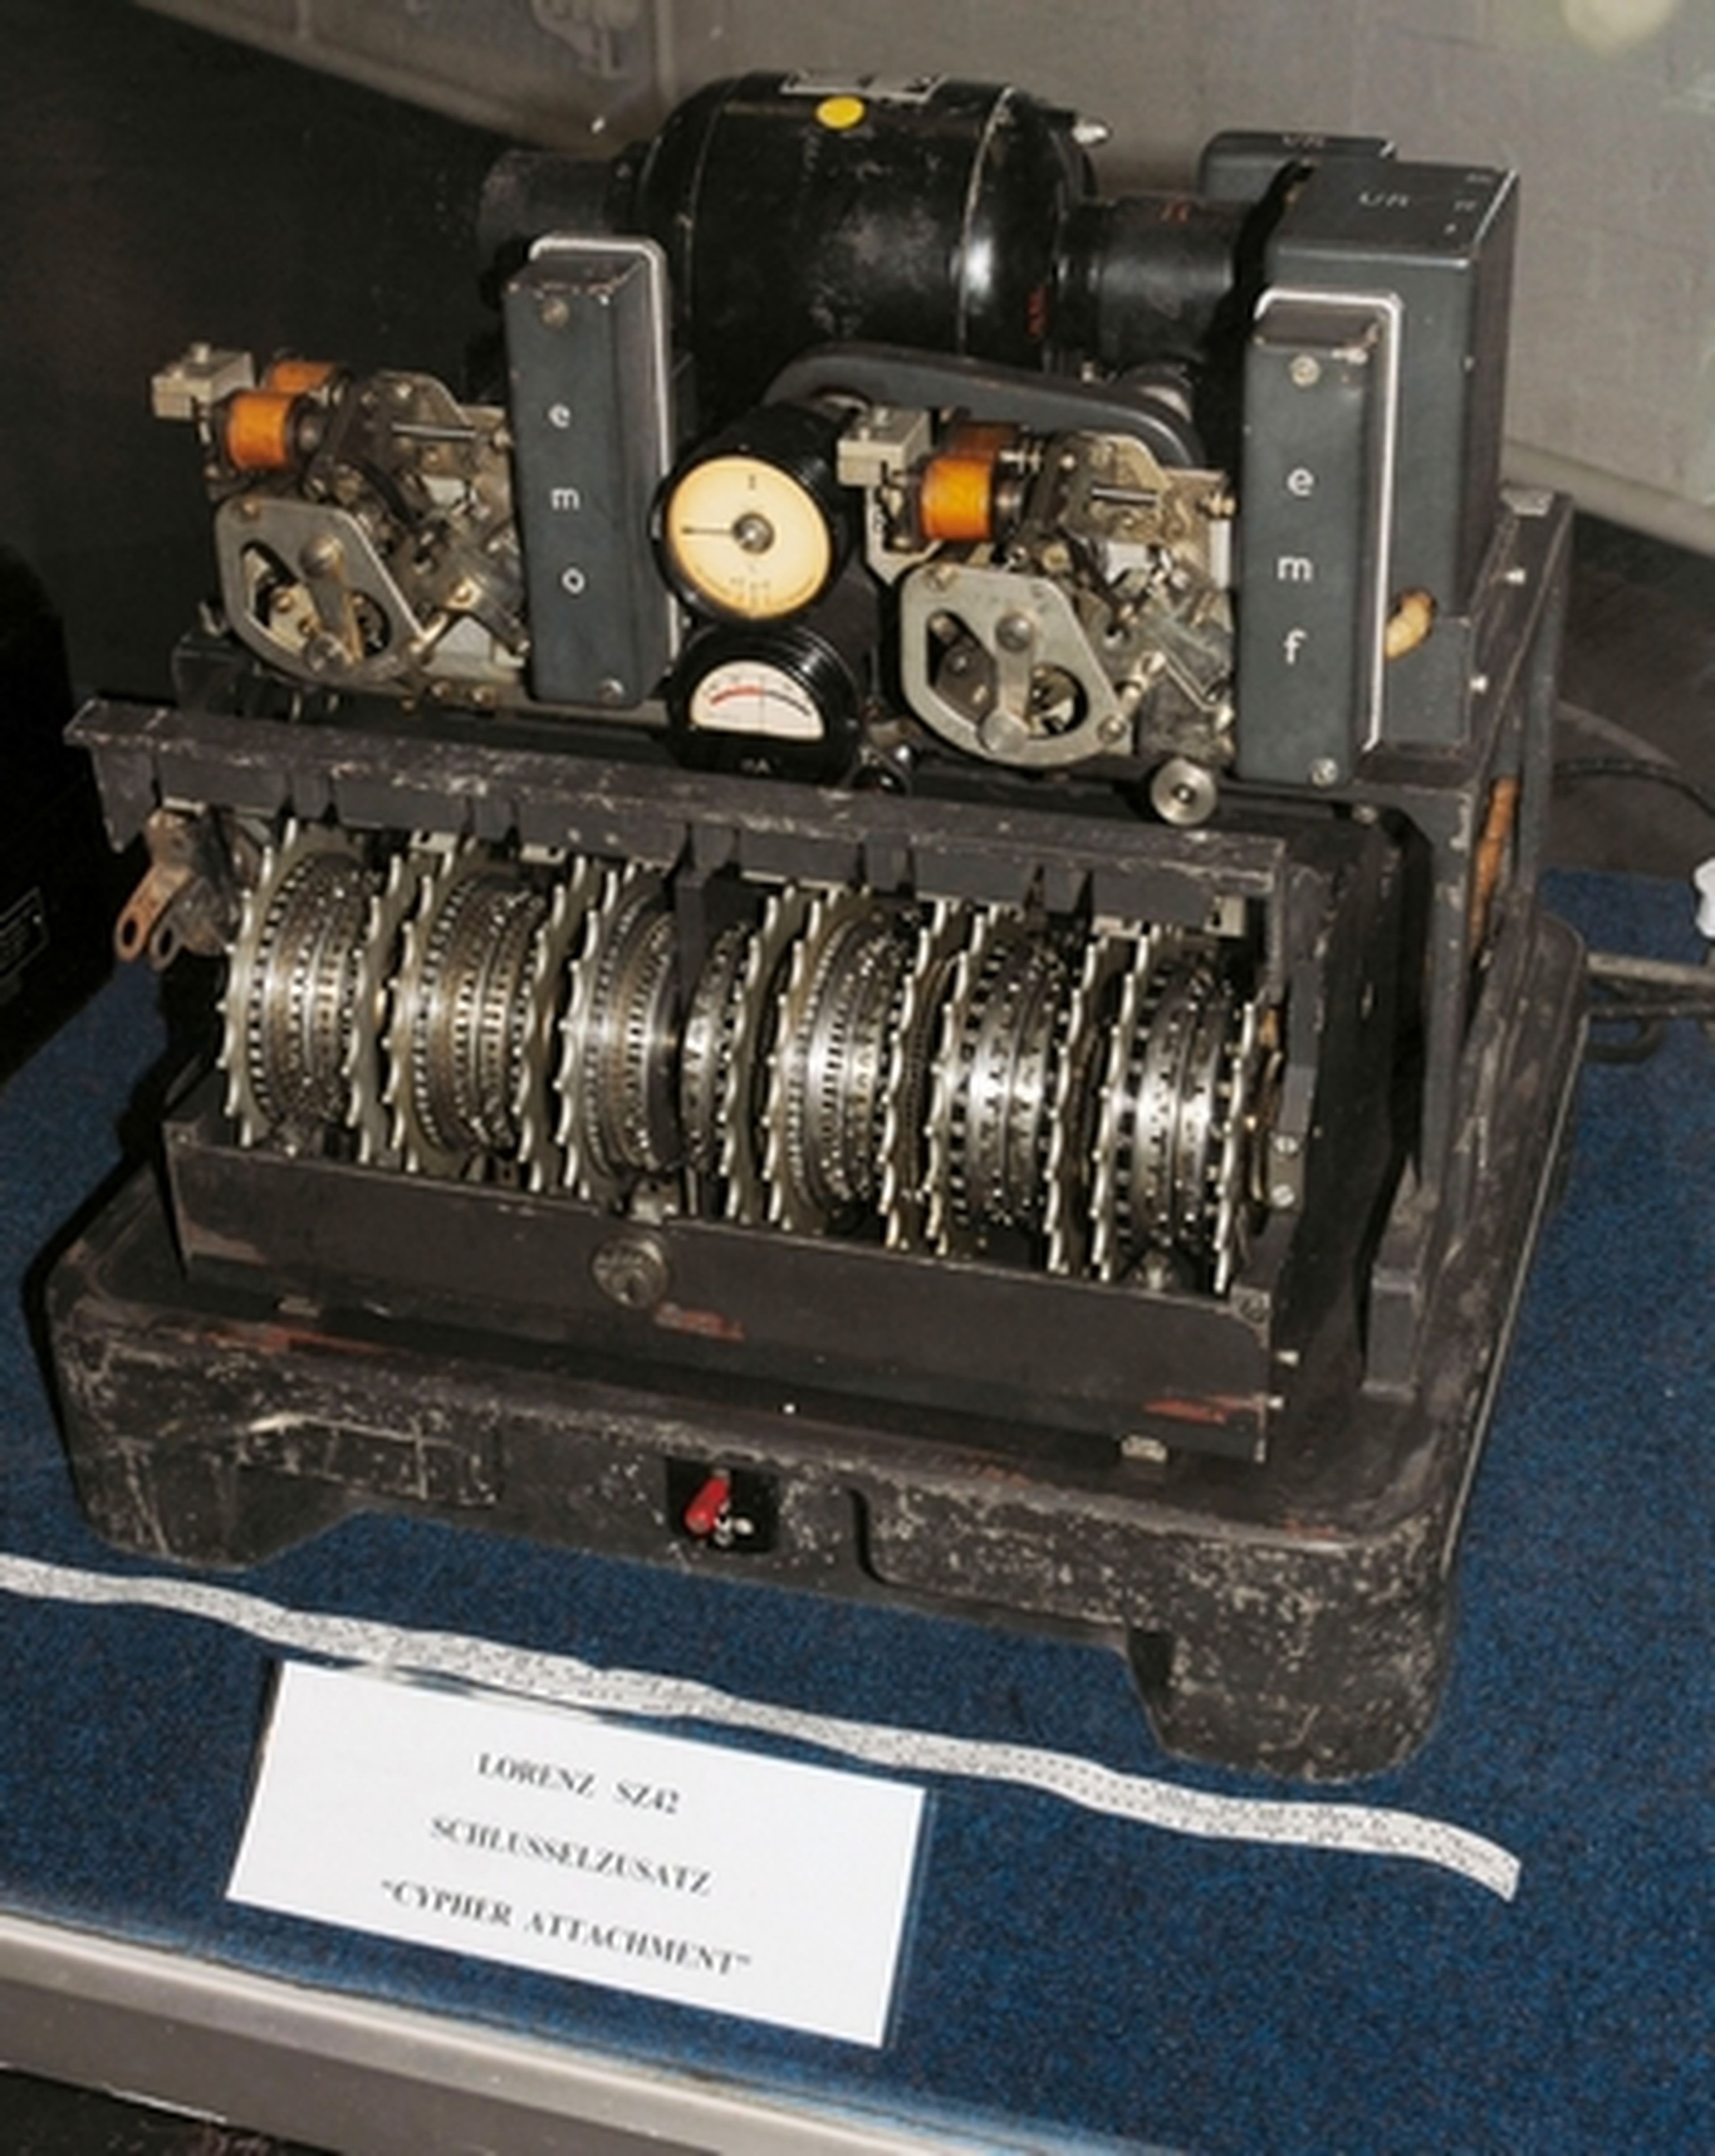 Máquina de encriptación de los nazis, vendida por 12 euros en eBay